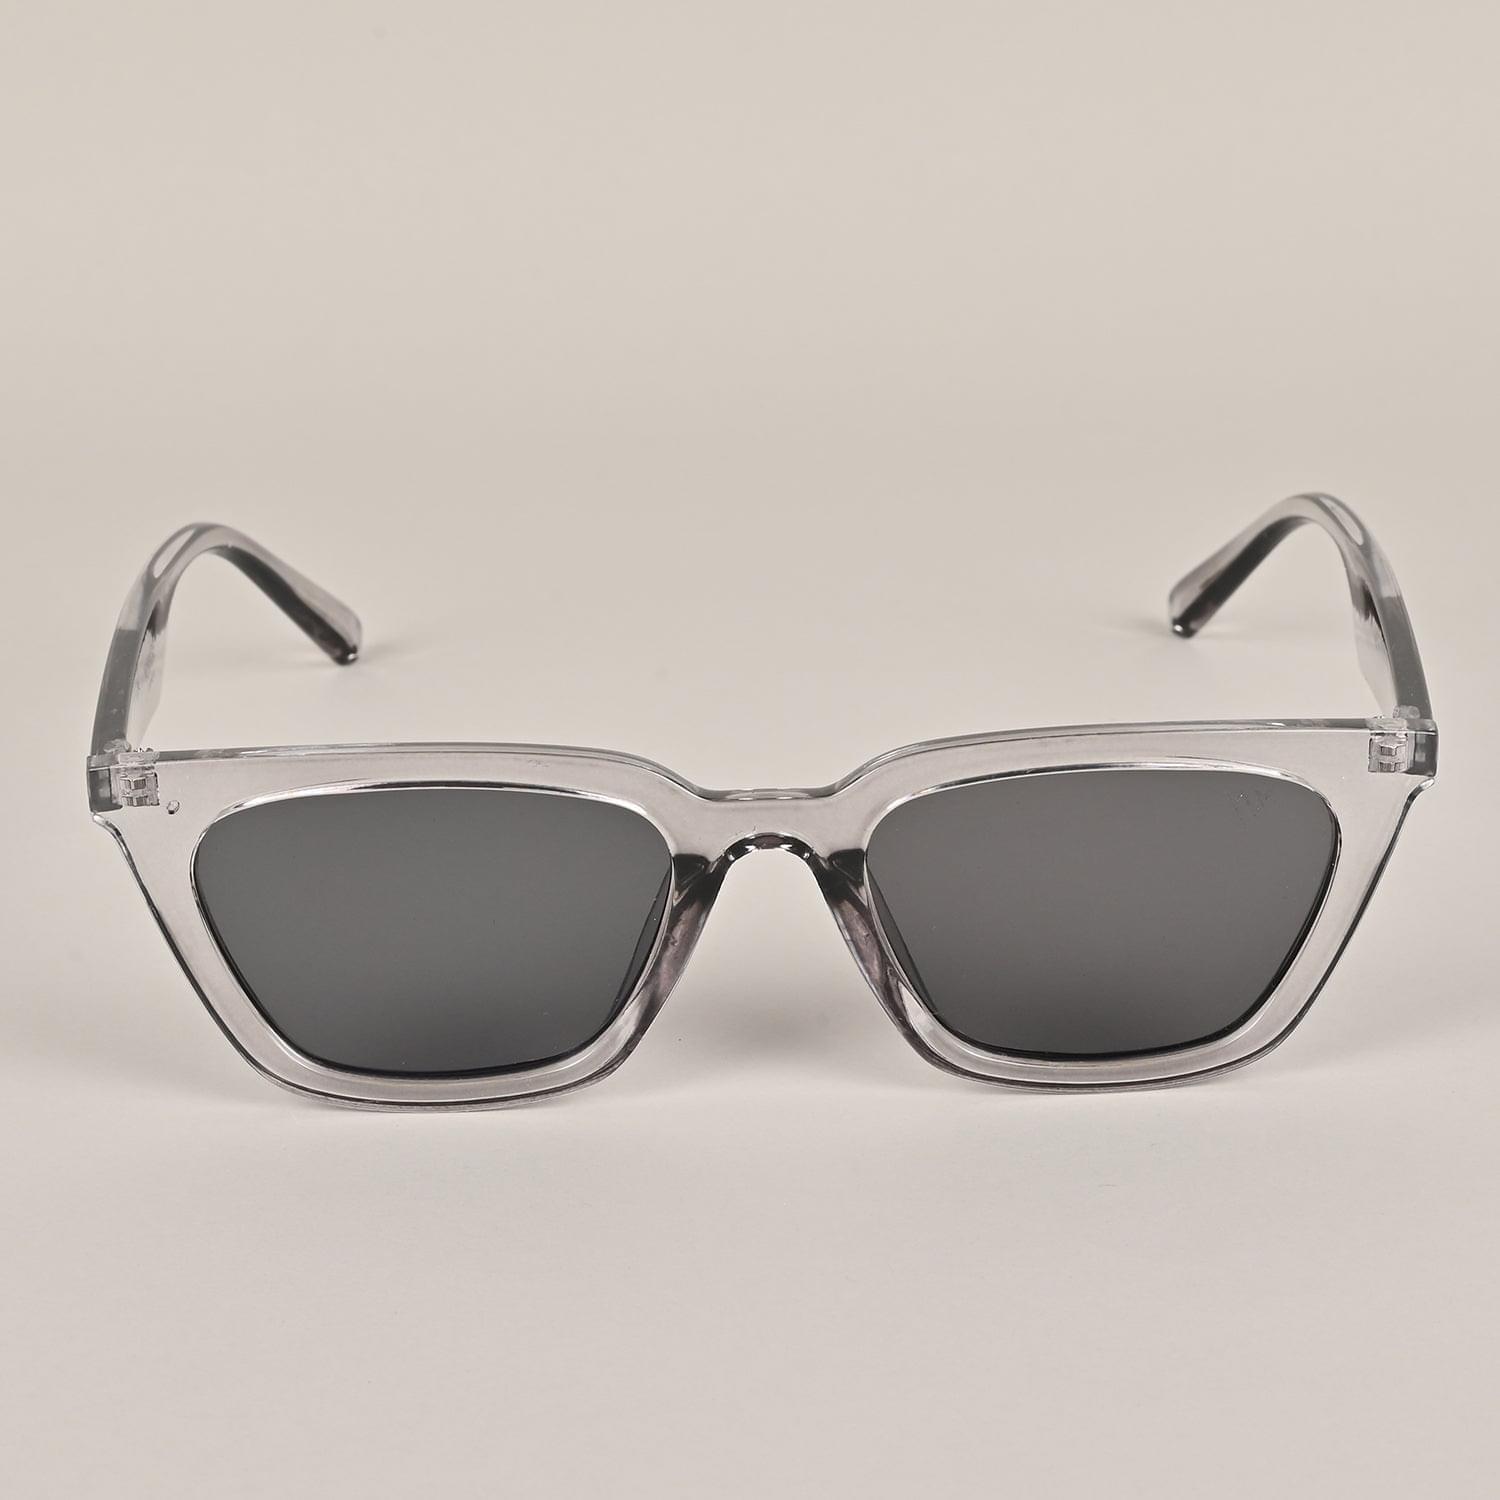 Voyage Black Cat-Eye Sunglasses MG3763